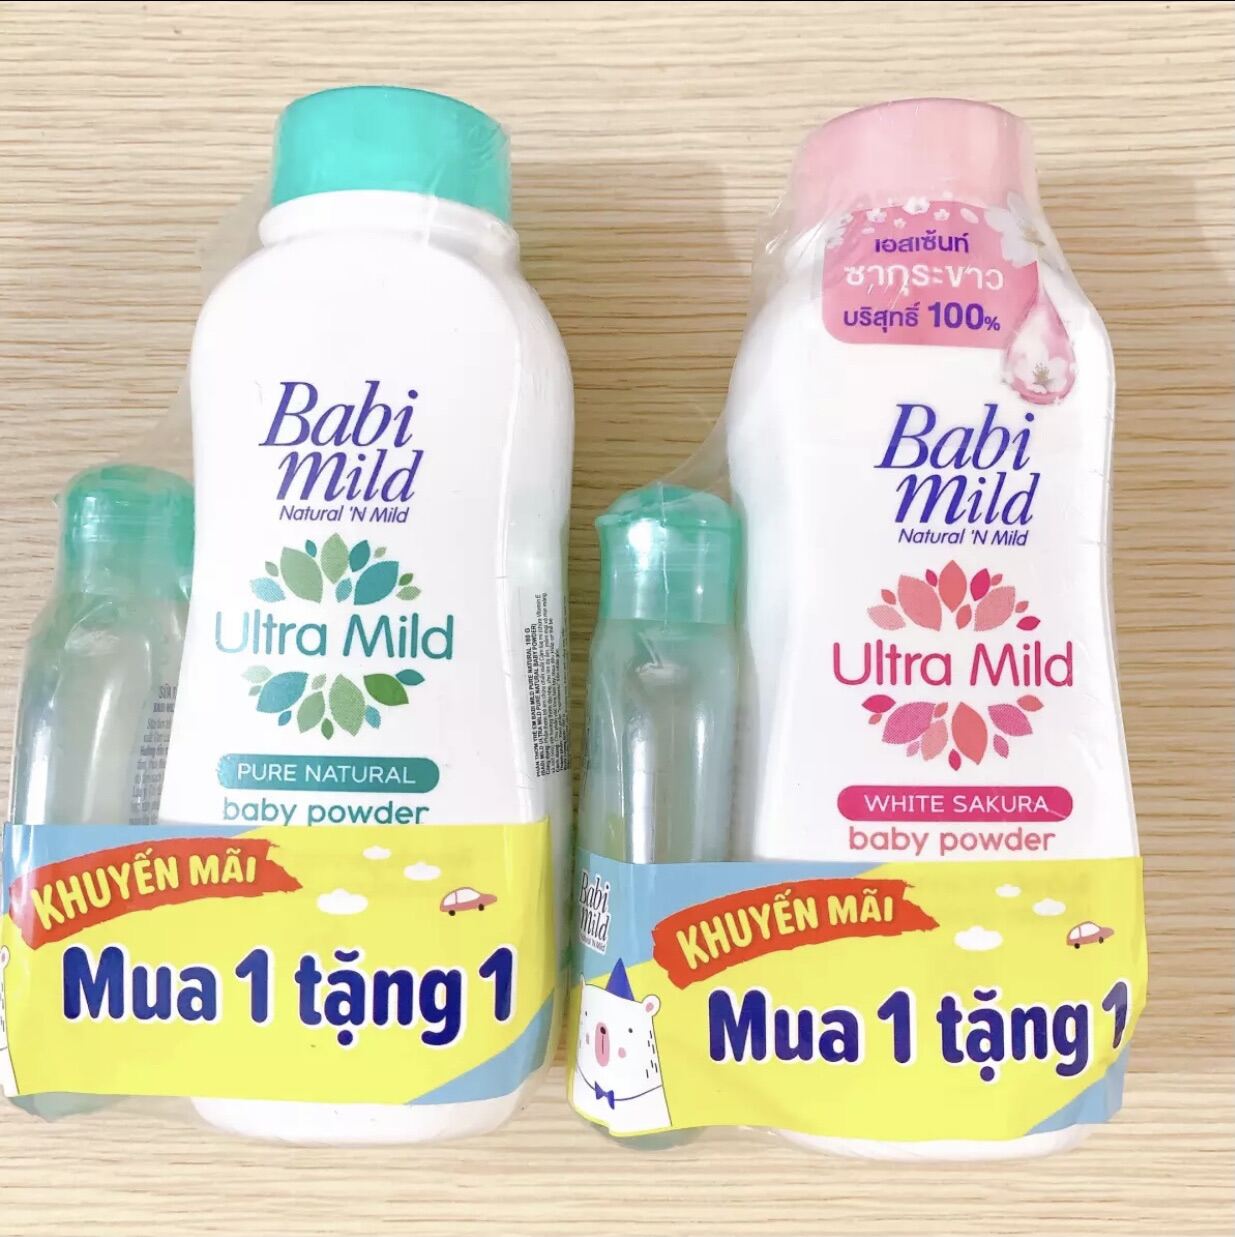 [Mua 1 tặng 1] Phấn Thơm Trẻ Em Babi Mild Pure Natural & White Sakura 180g Tặng 1 Sữa tắm Babi mild cùng loại 50ml